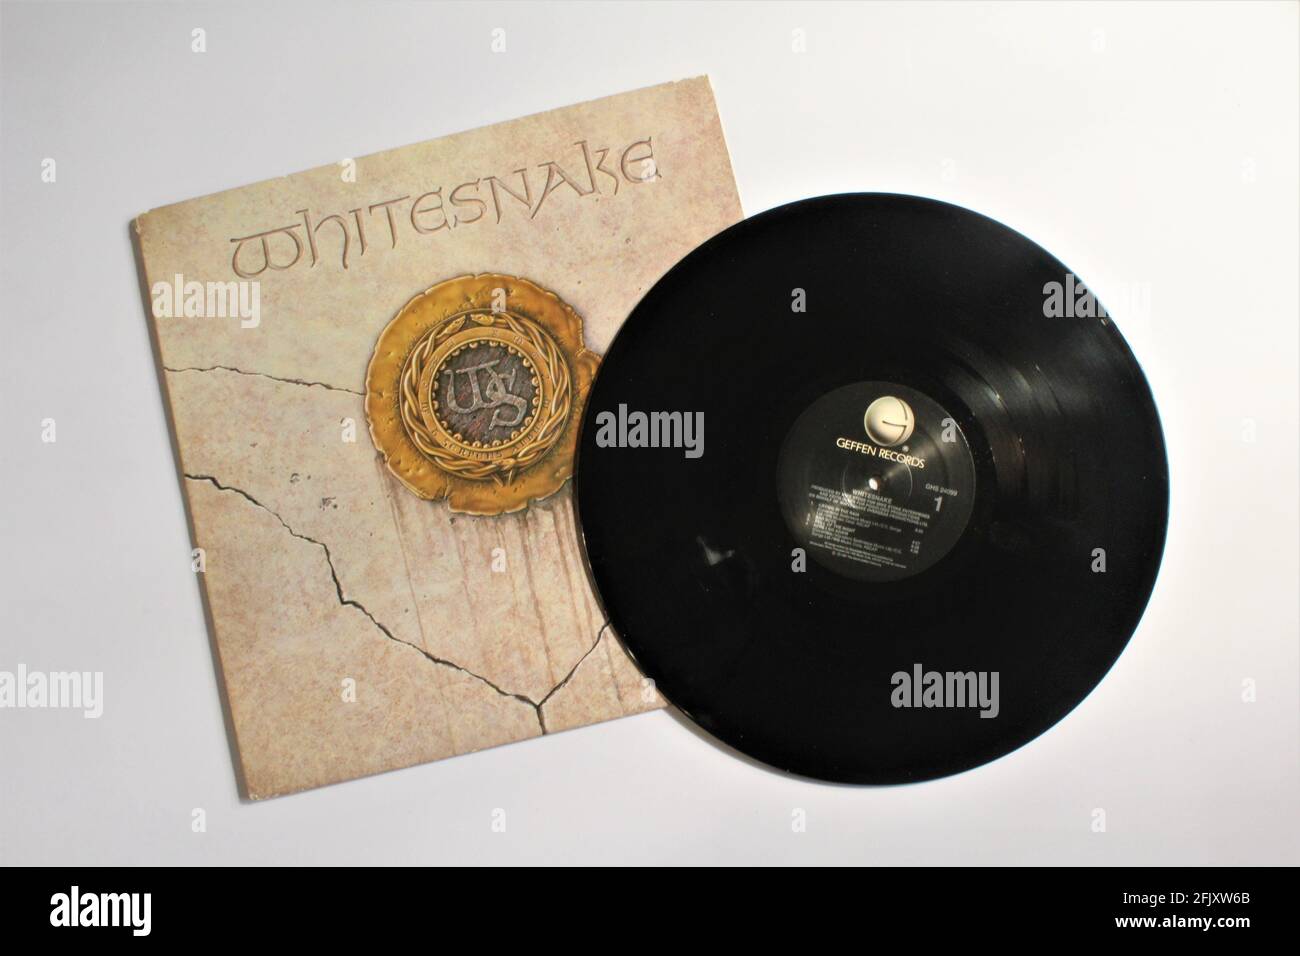 Klassische Rockband, Whitesnake, Musikalbum auf Vinyl-Schallplatte. Selbstbetiteltes Album. Stockfoto